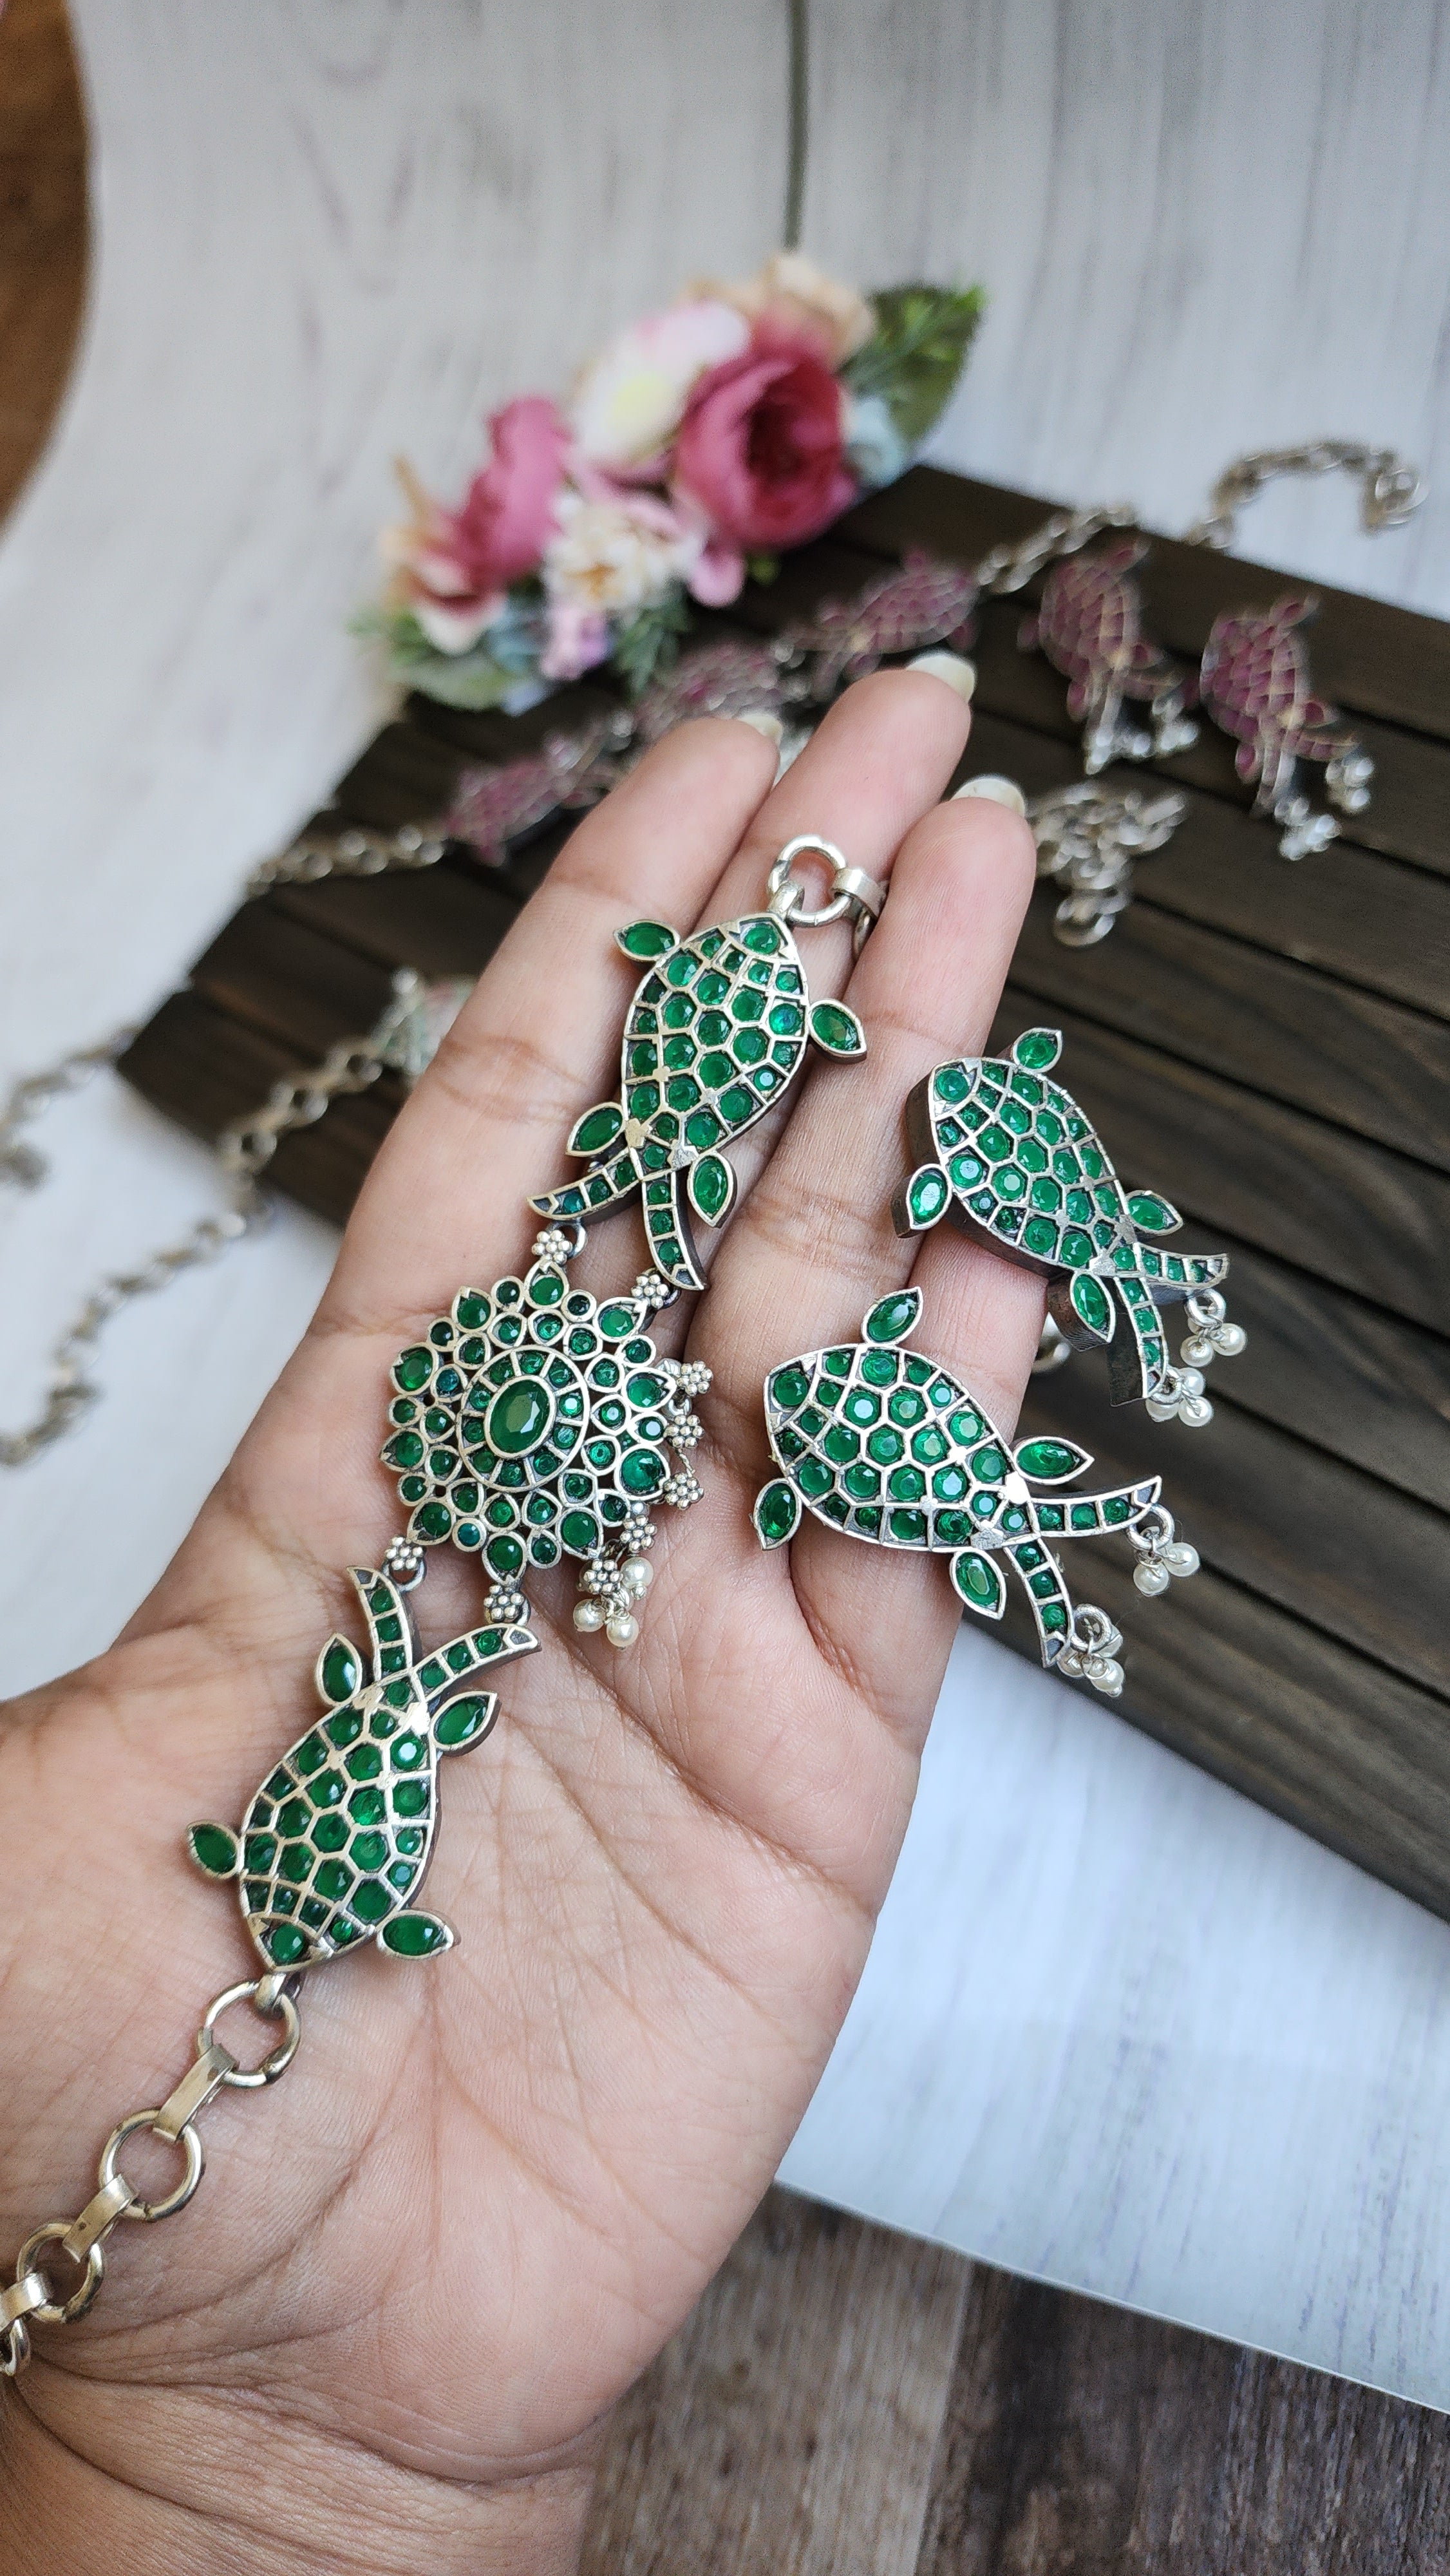 Fish Silver alike peacock choker necklace set